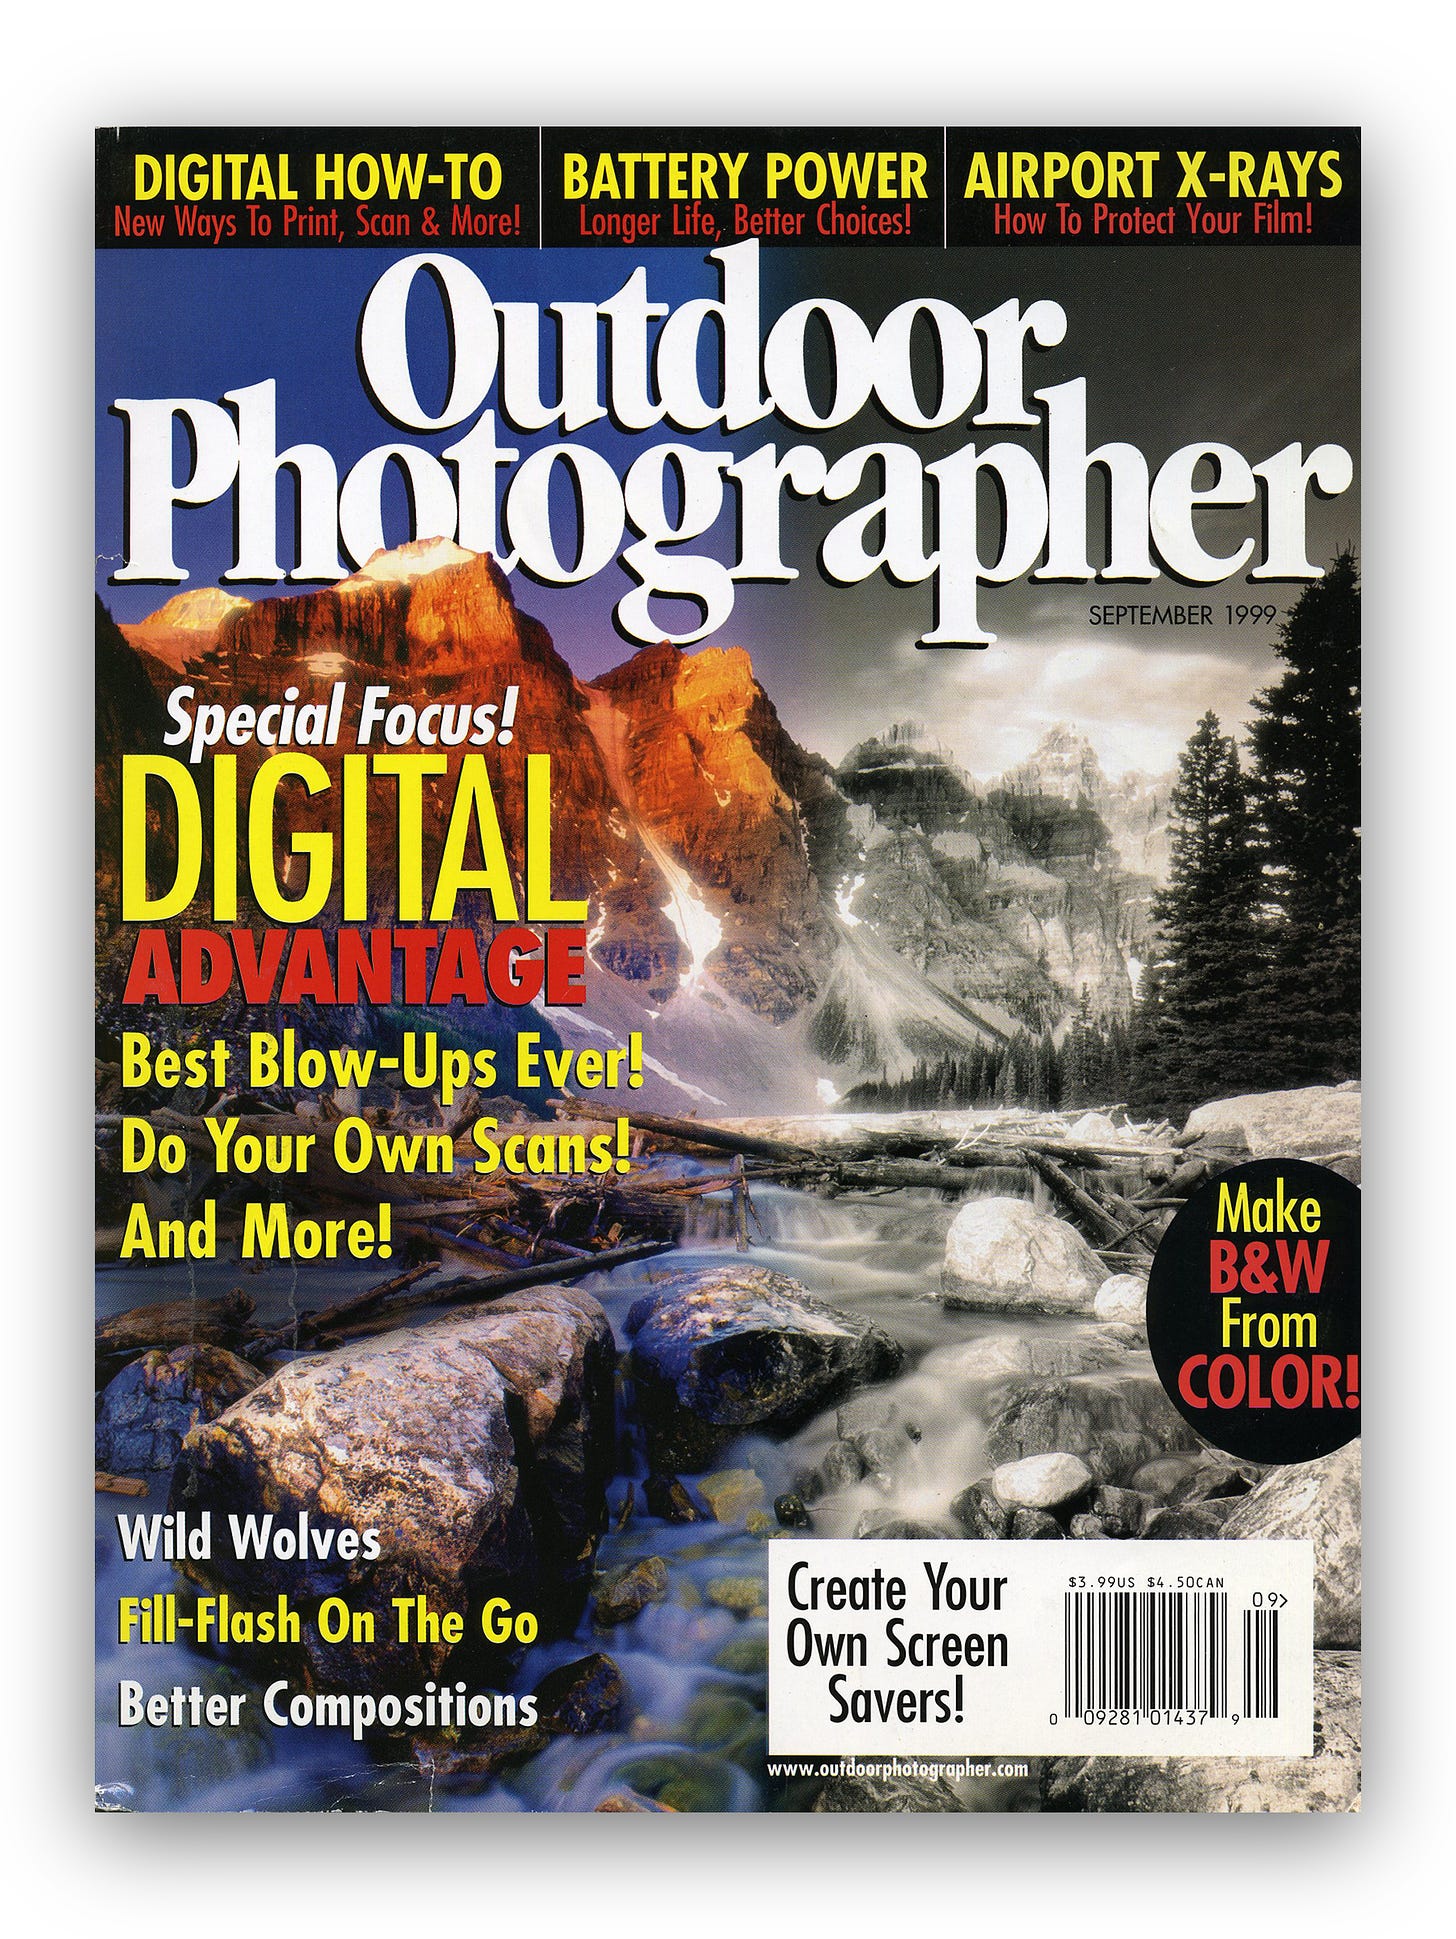 1999 Issue of Outdoor Photographer magazine